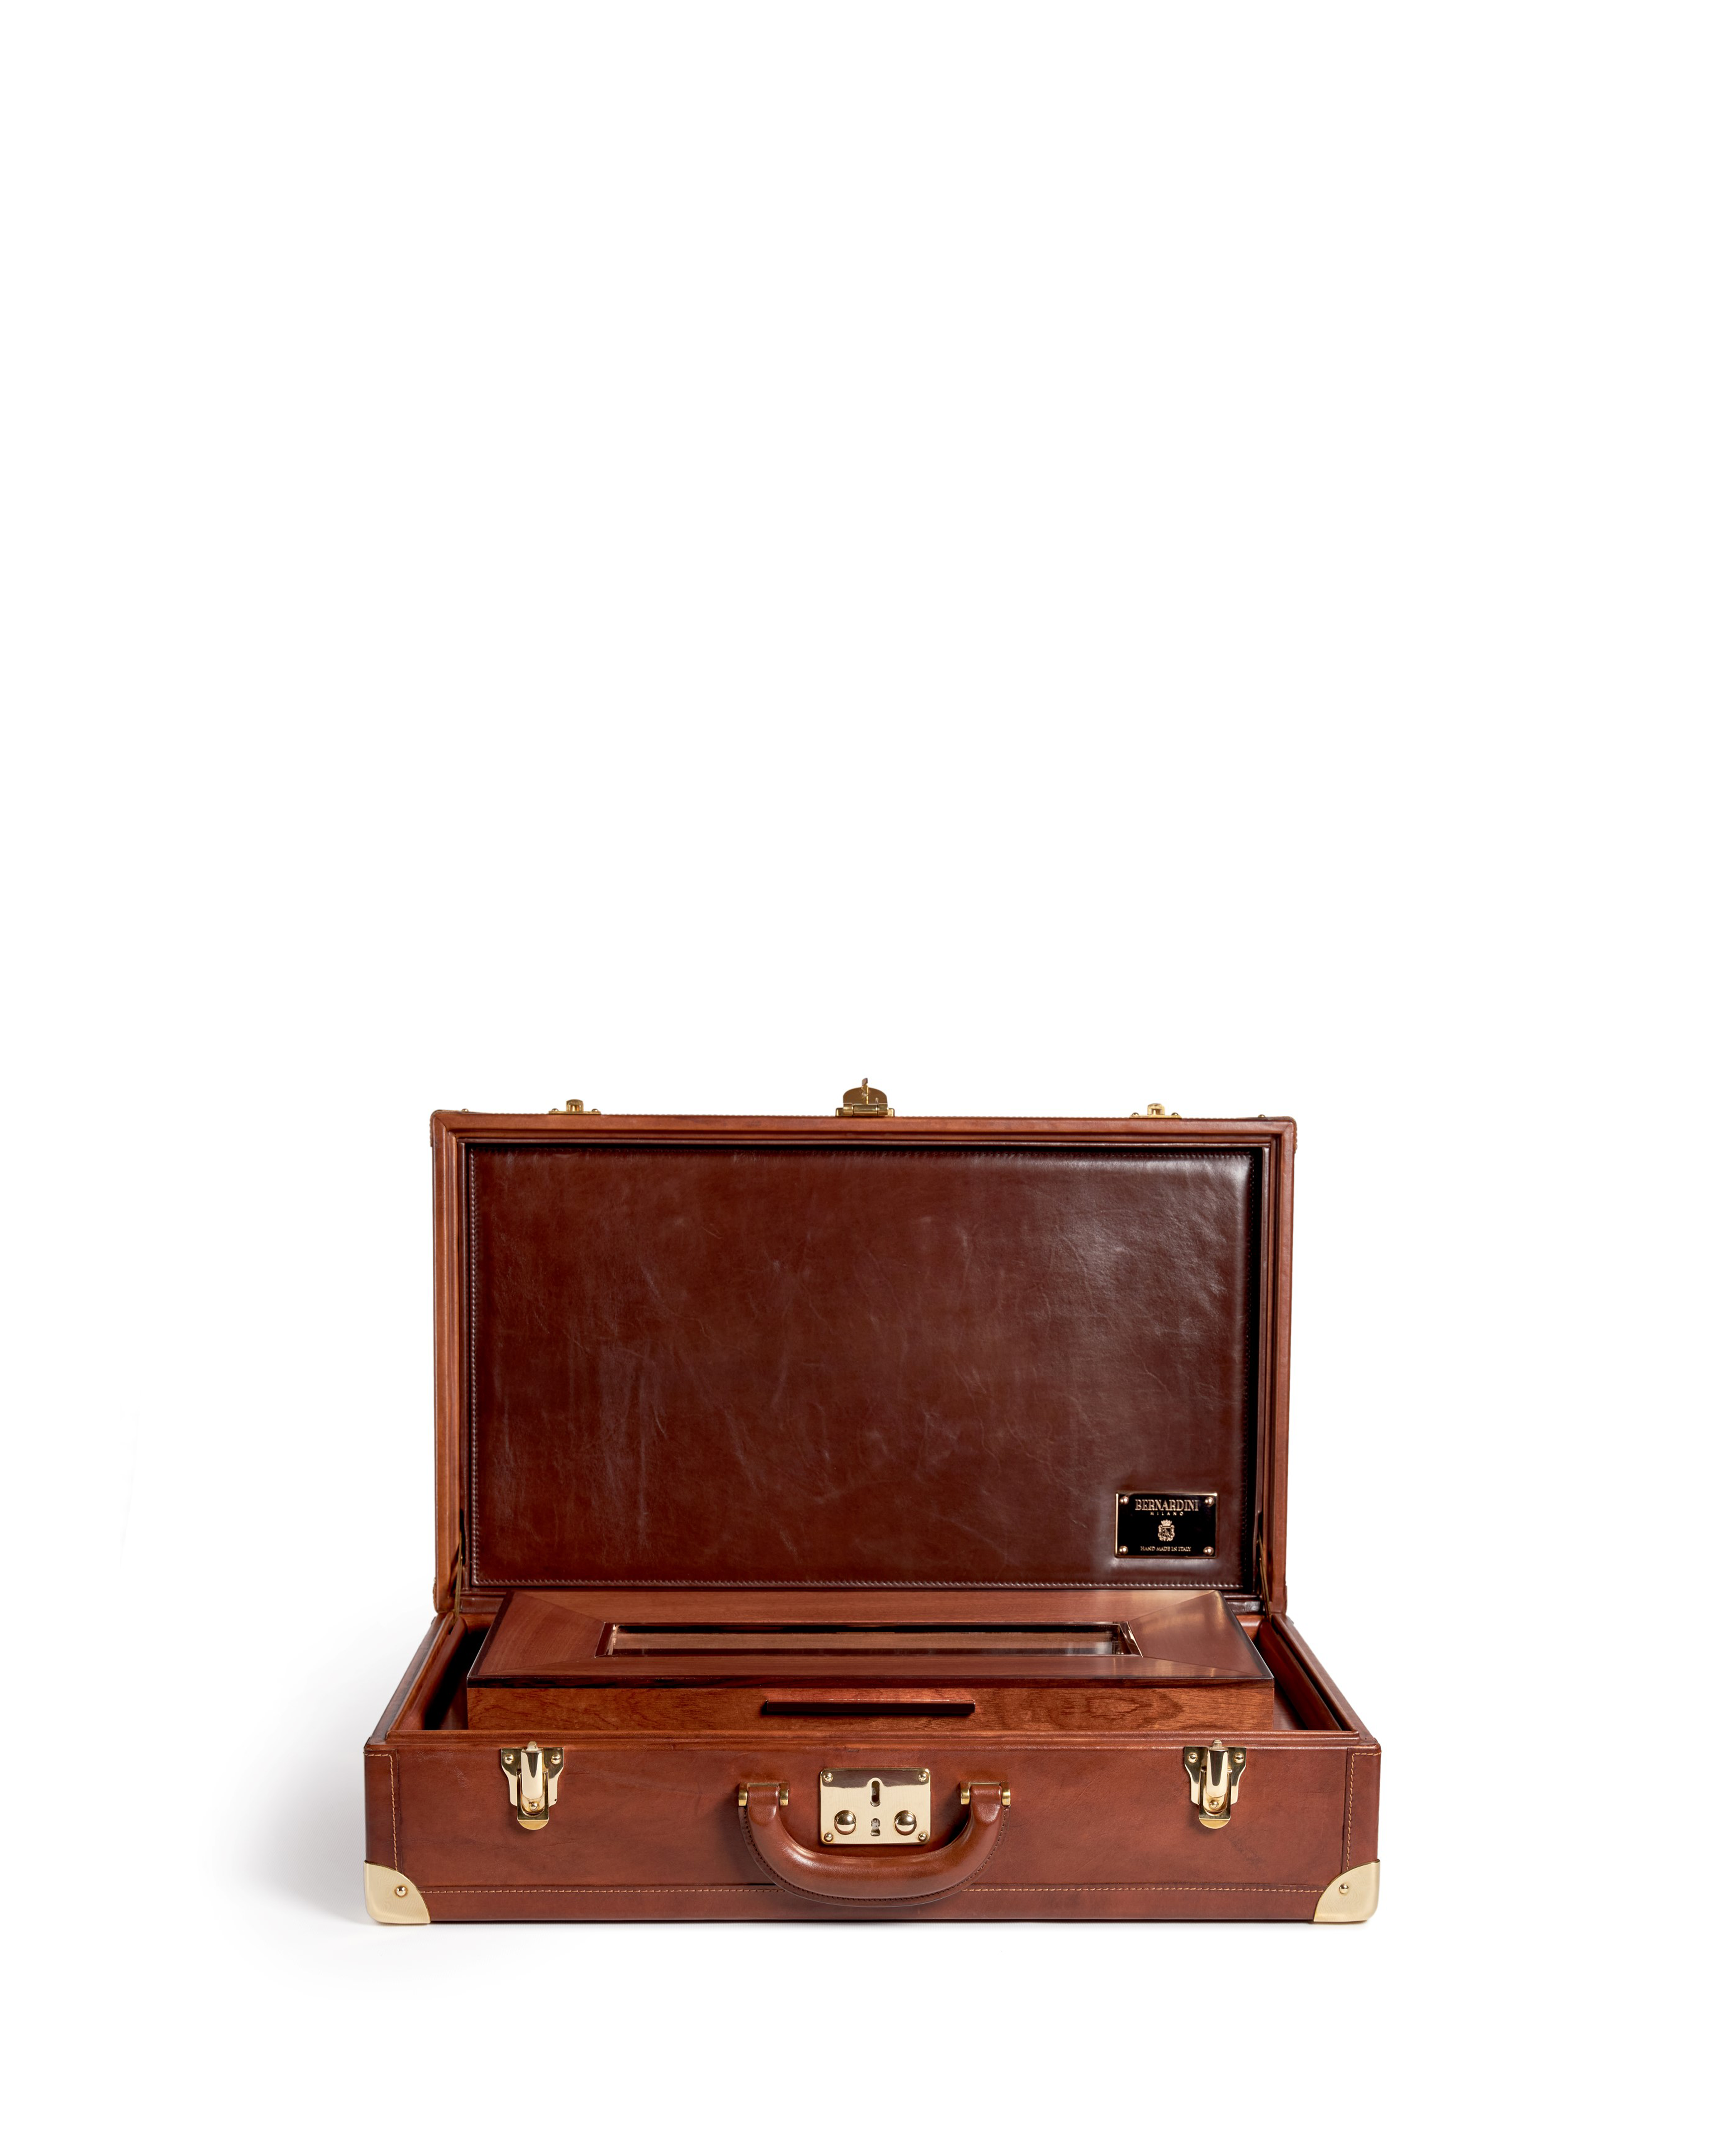 Bernardini Humidor Briefcase - Brown leather and Mahogany